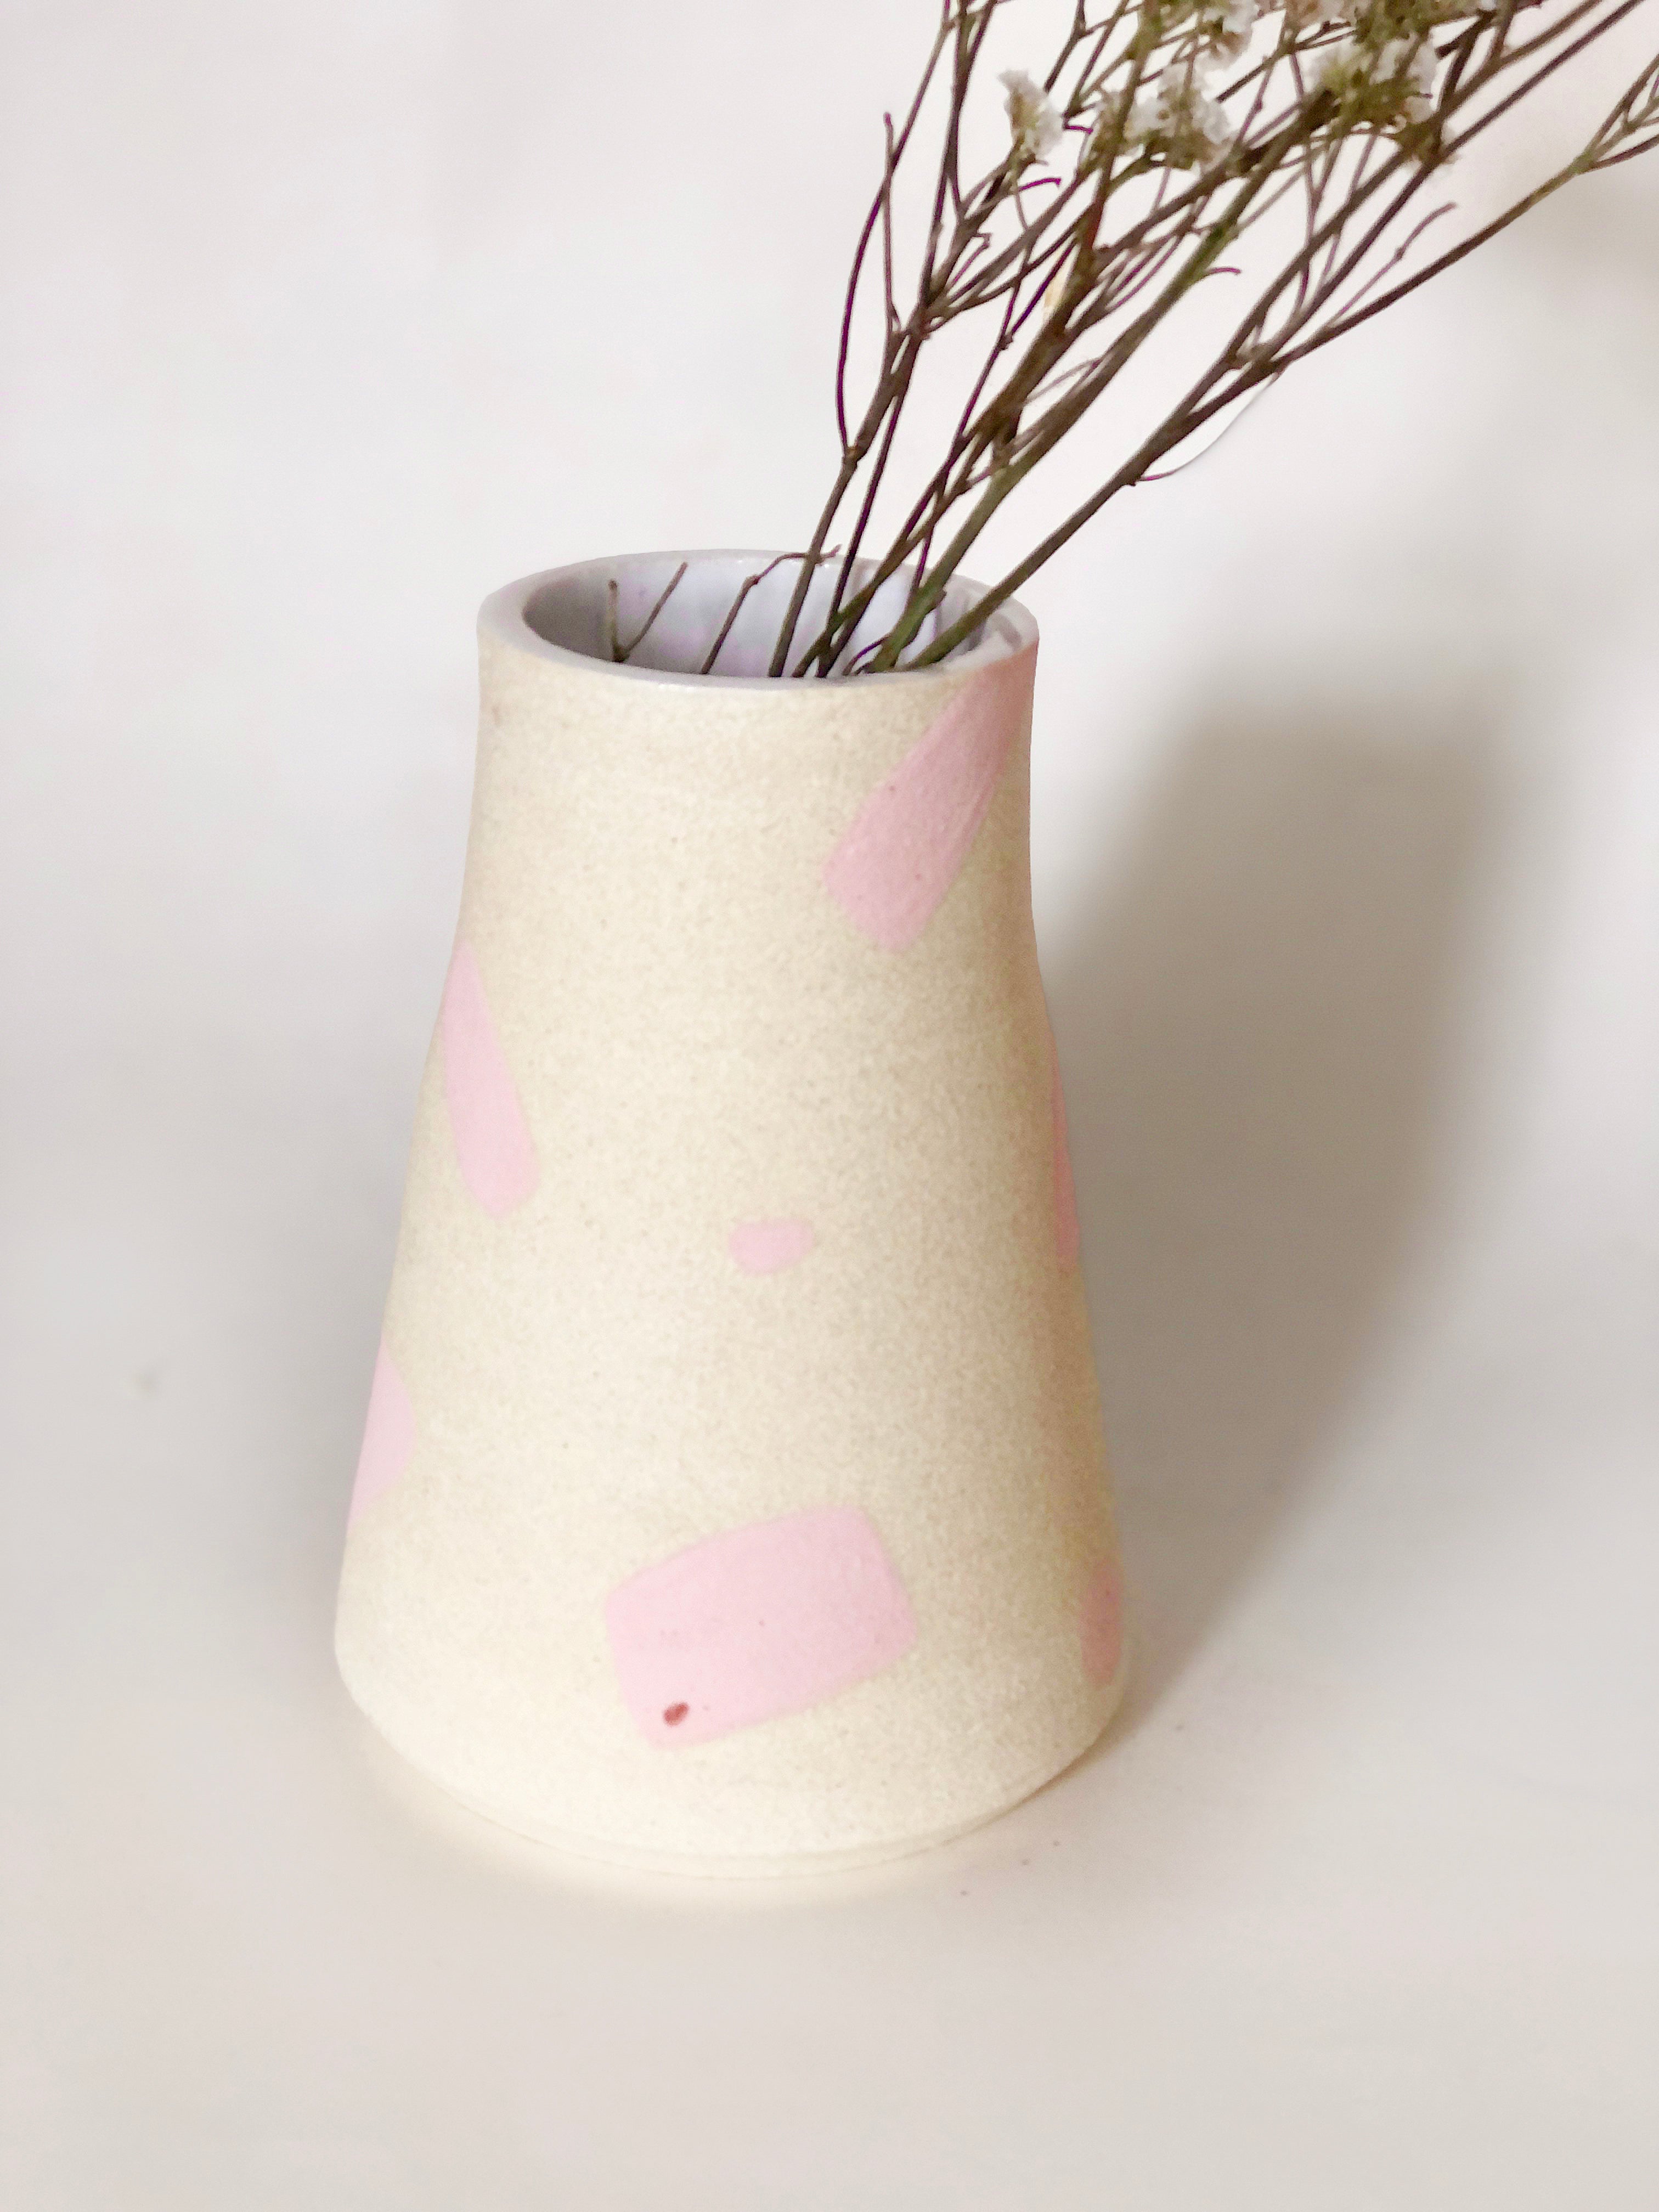 Pink Shape on White Vases